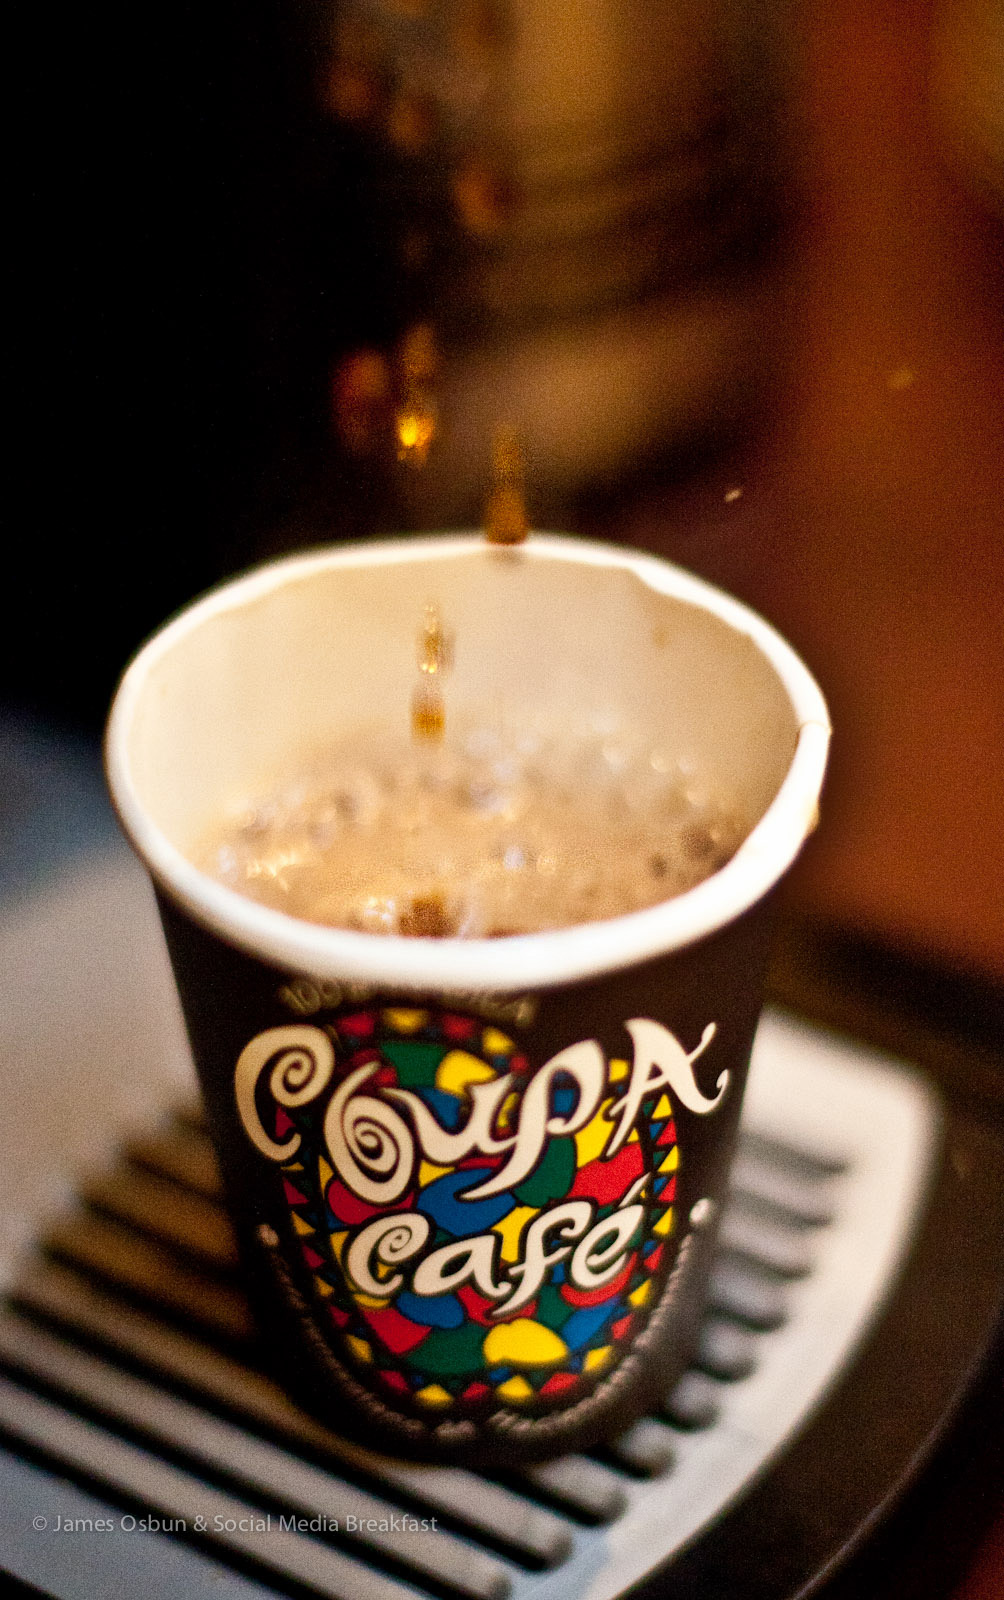 Coupa Cafe rocks! :)